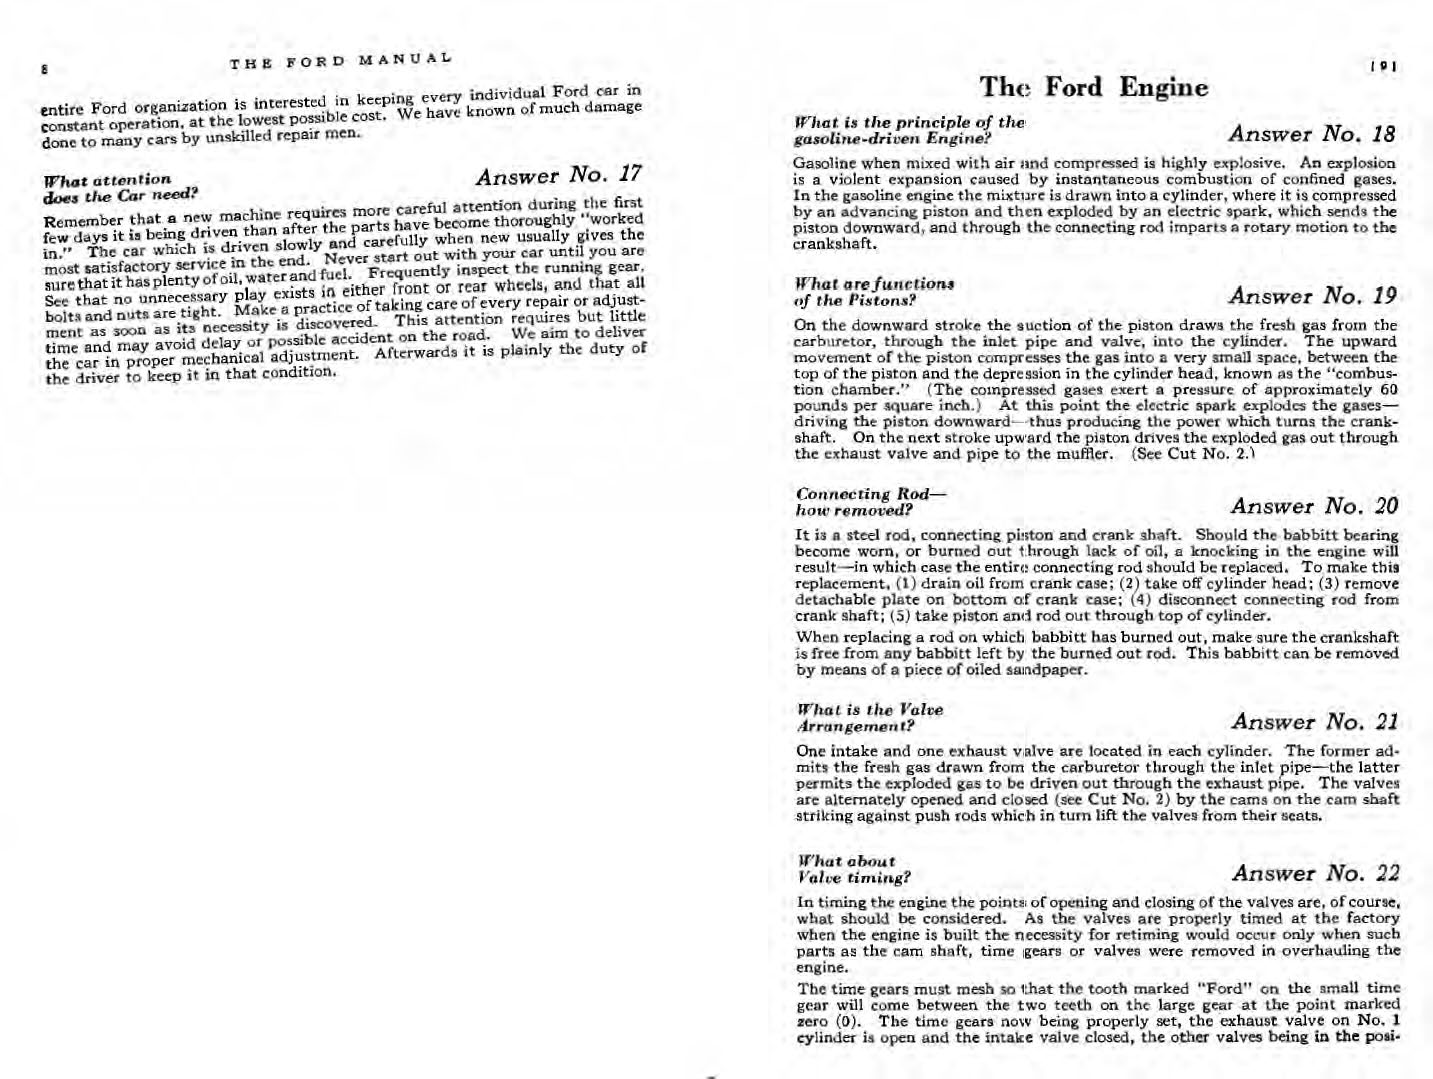 n_1926 Ford Owners Manual-08-09.jpg